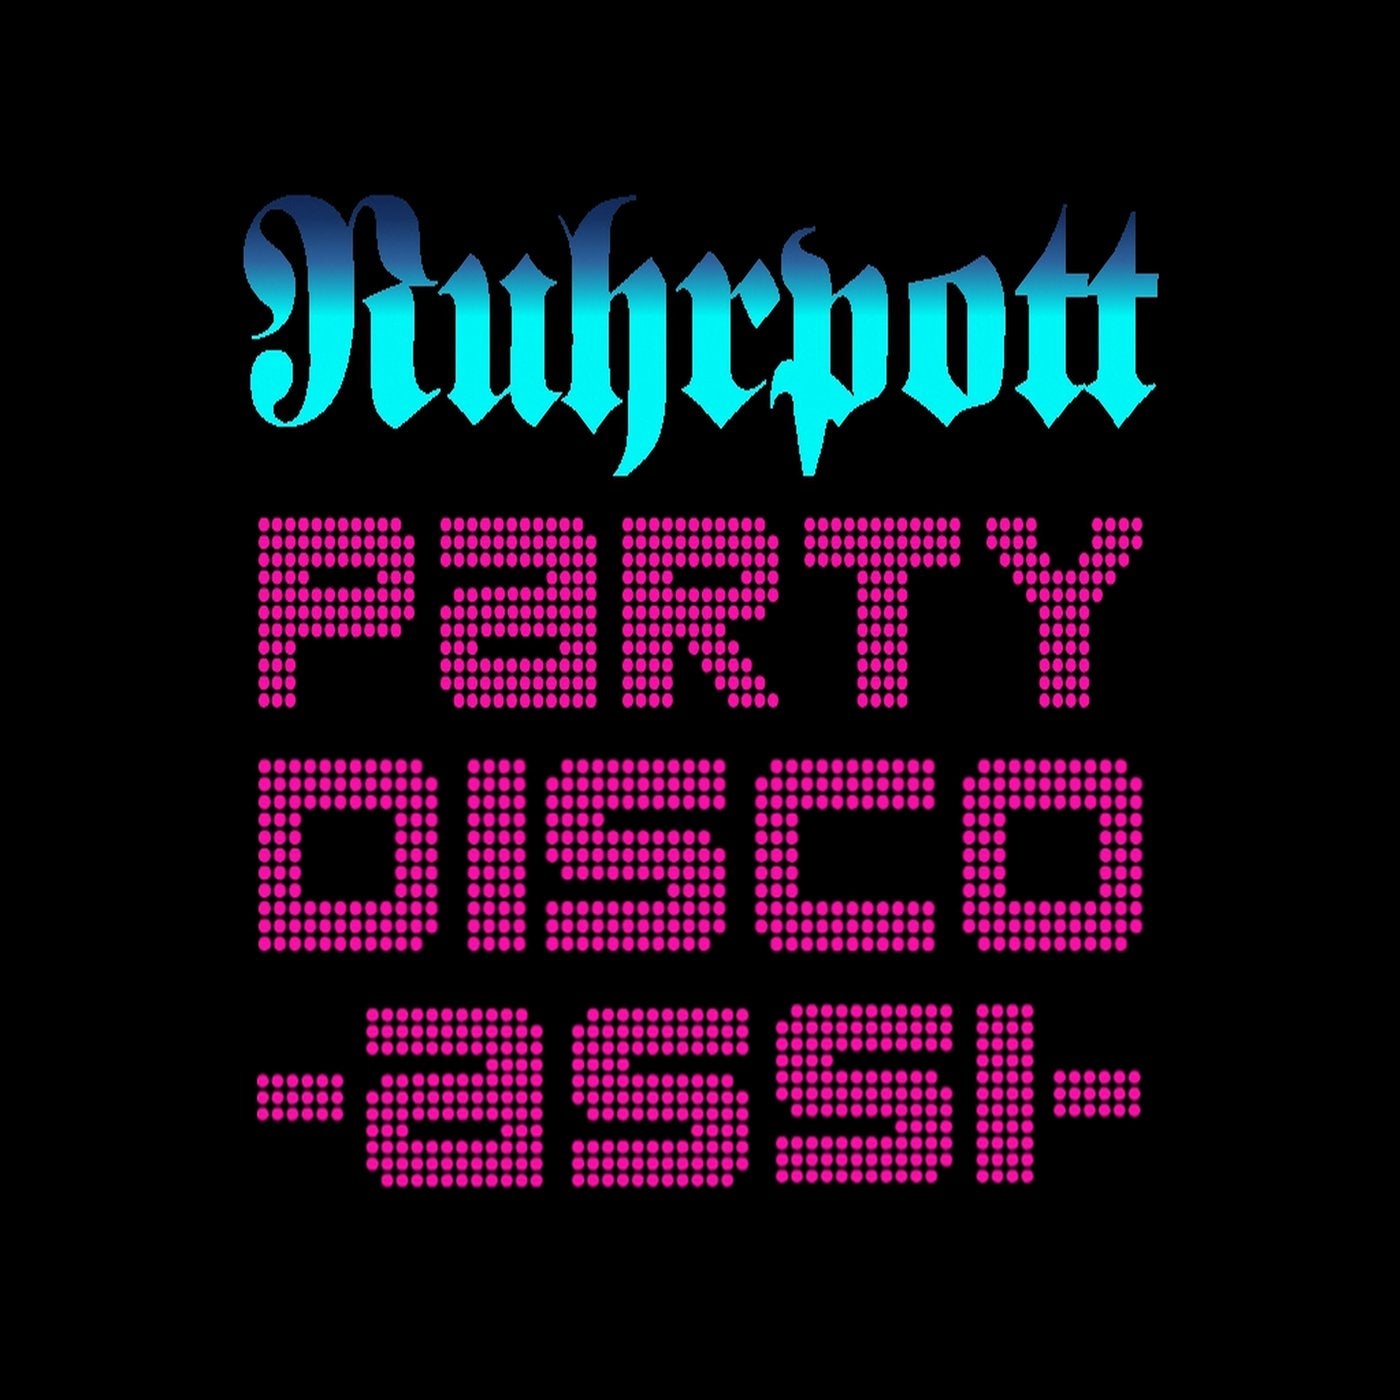 Ruhrpott Party Disco Assi